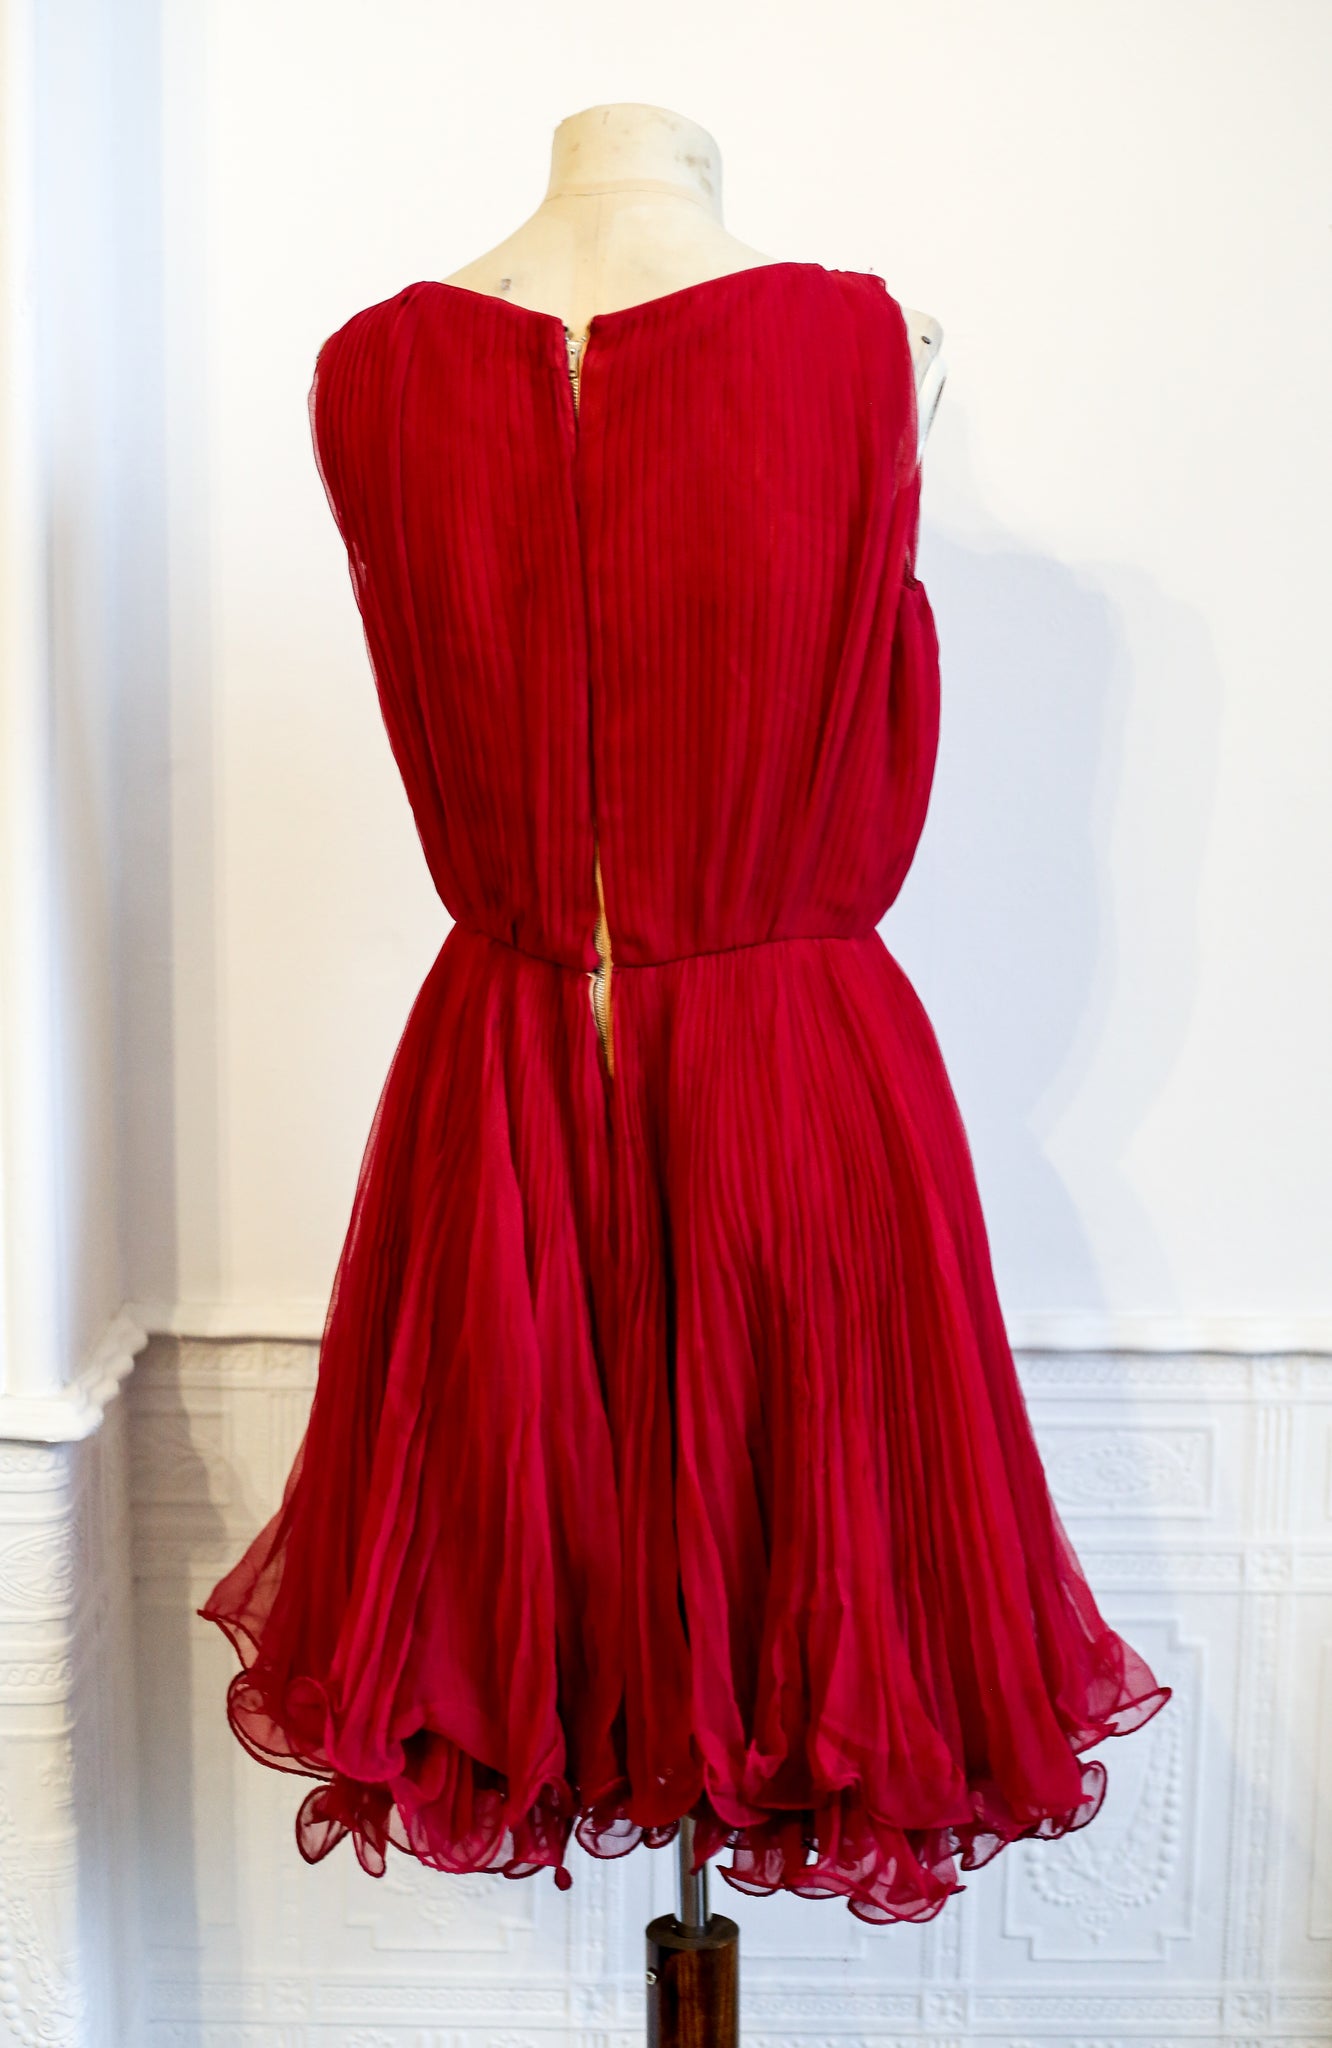 red chiffon cocktail dress